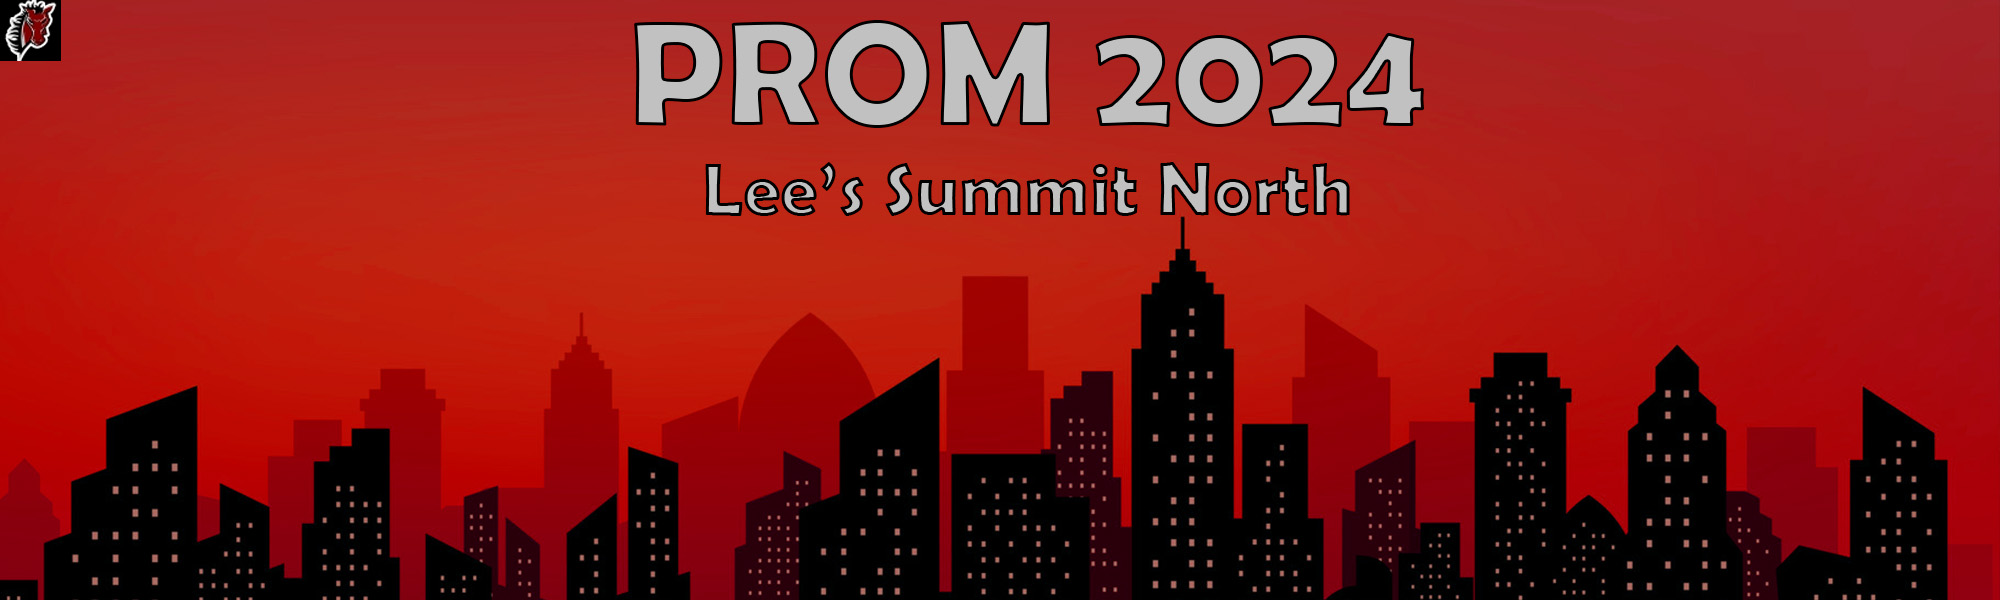 Banner Lee's Summit North Prom 2024